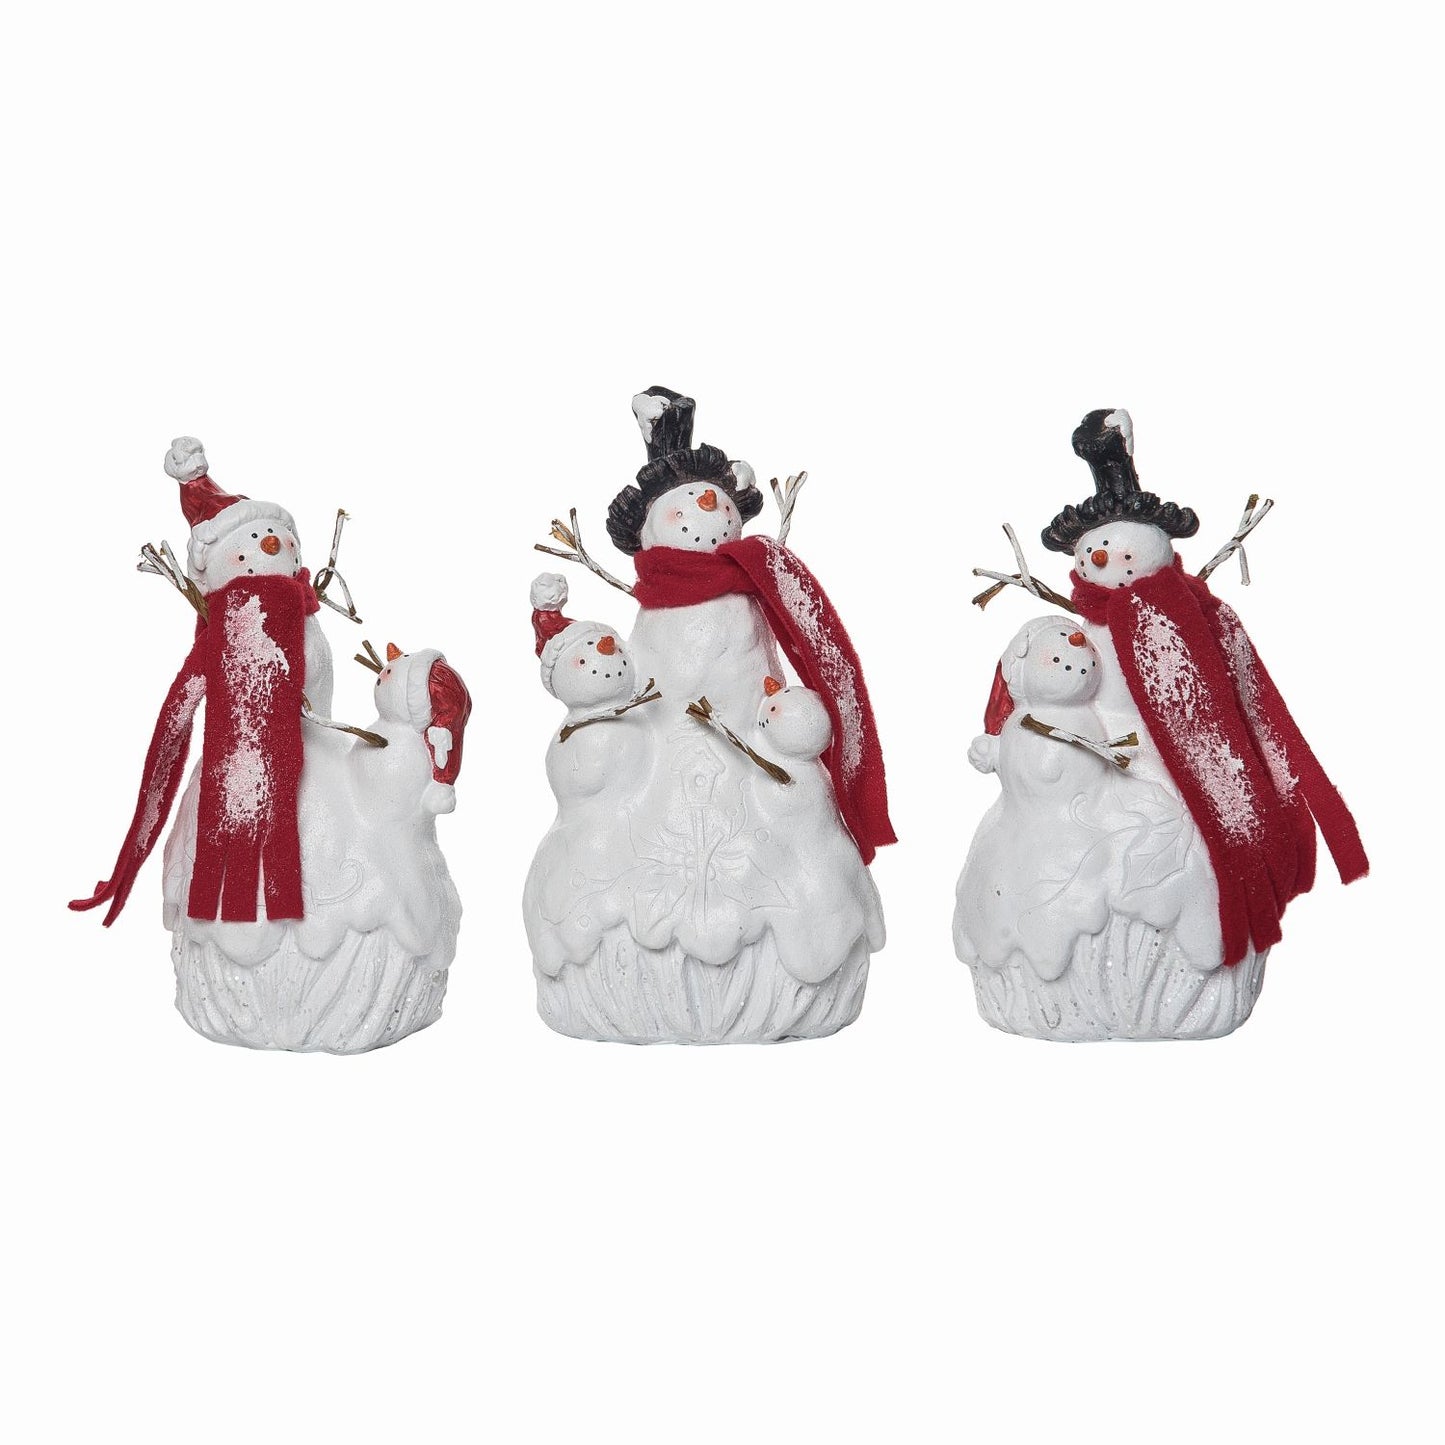 Transpac Resin Snowman Family Figurine, Set Of 3, Assortment